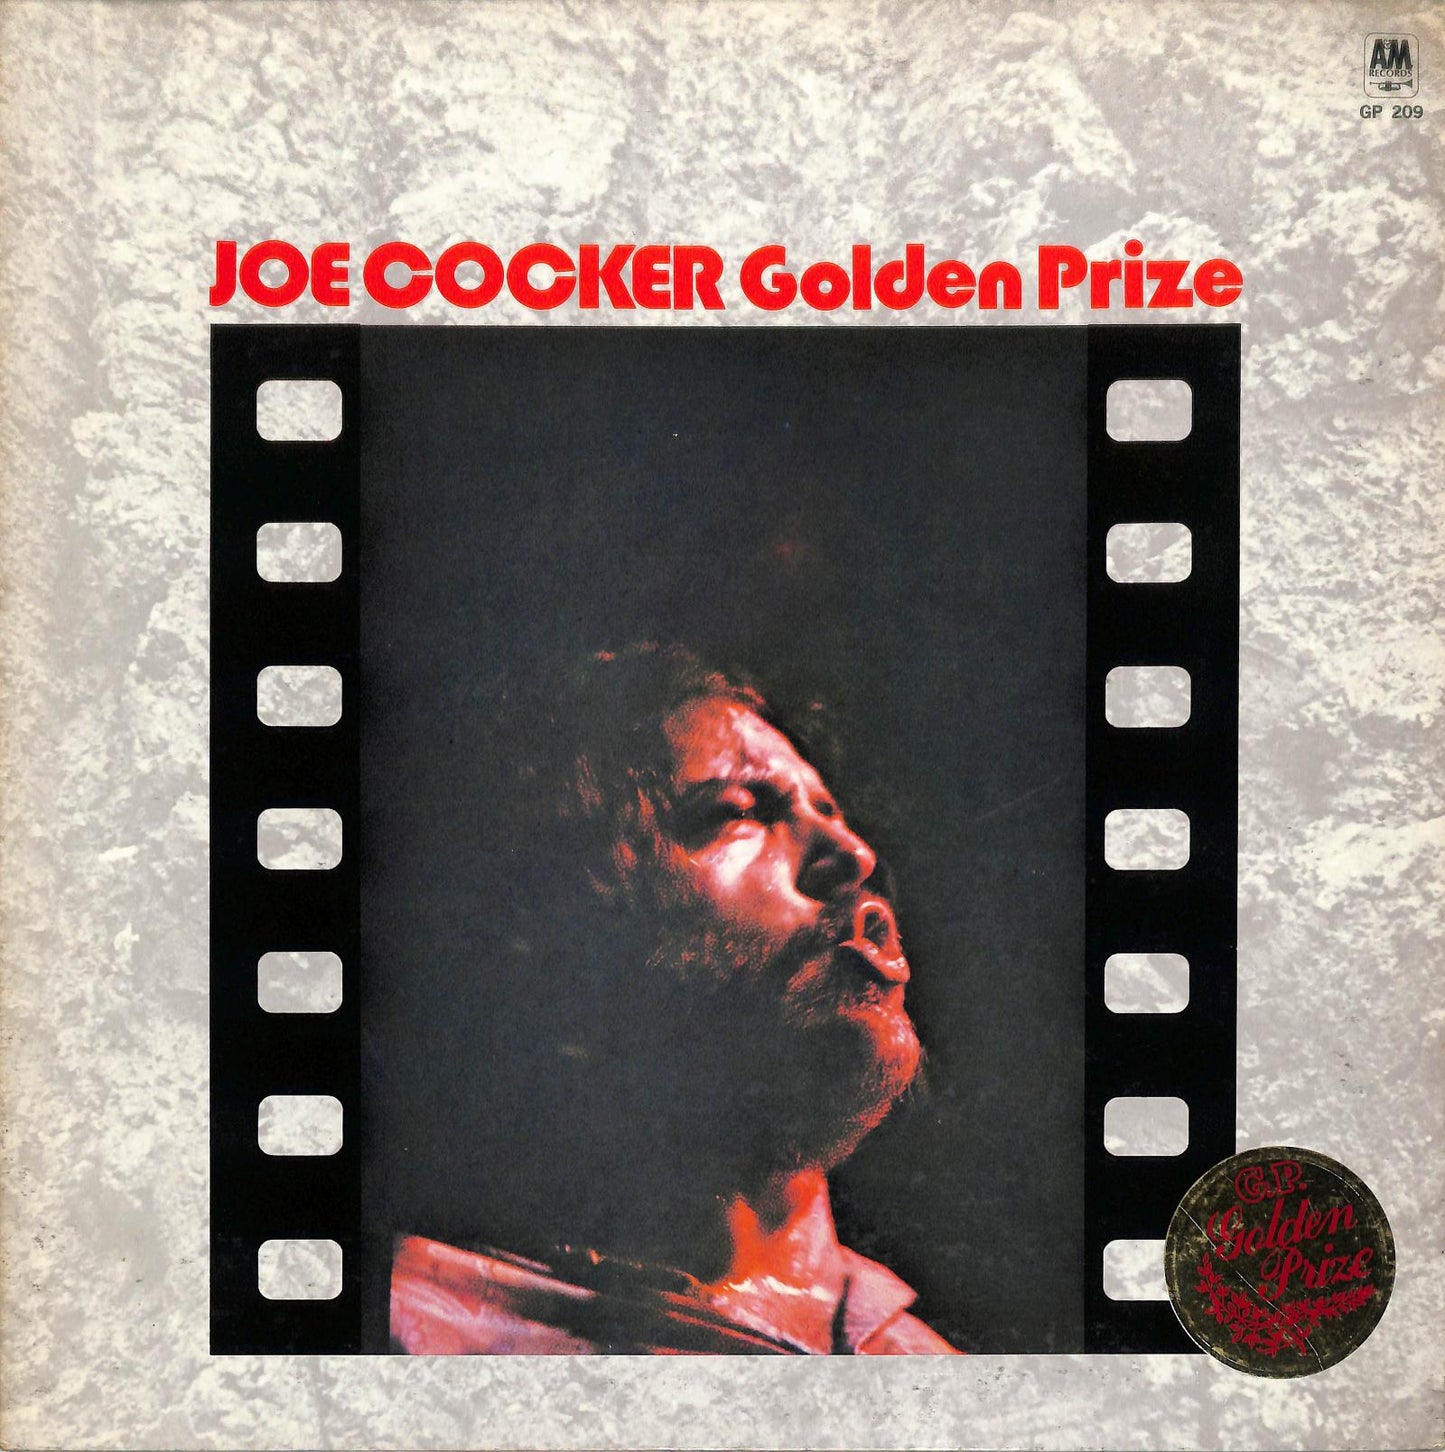 JOE COCKER - Golden Prize